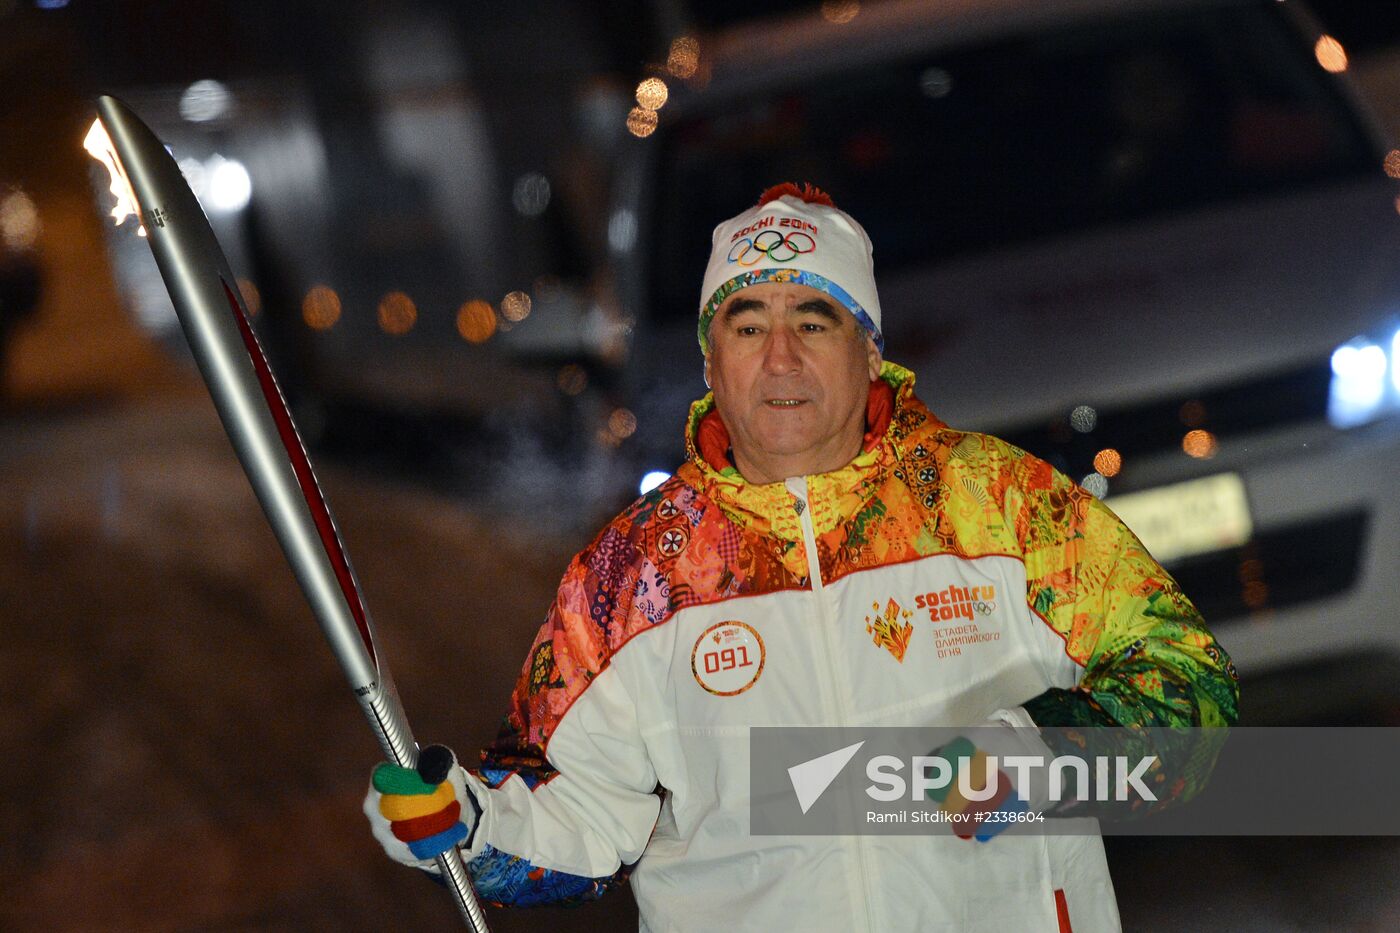 Sochi 2014 Olympic torch relay. Kurgan